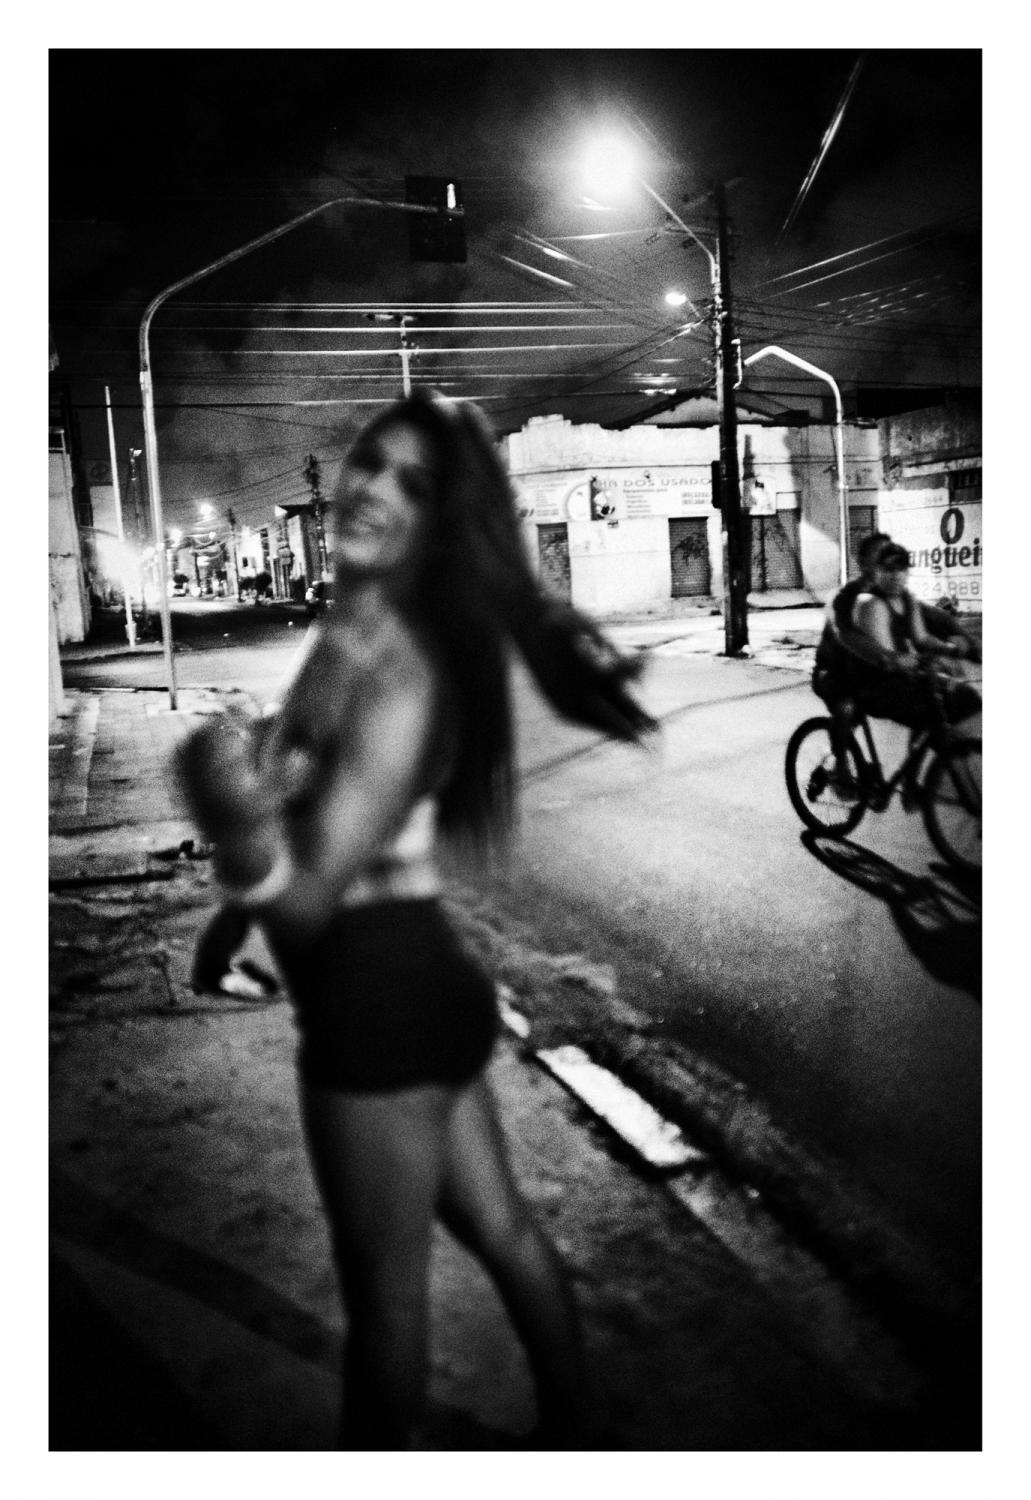 All imperfect things - Fortaleza, Brazil. April 2012. Sahsa Matori is a...